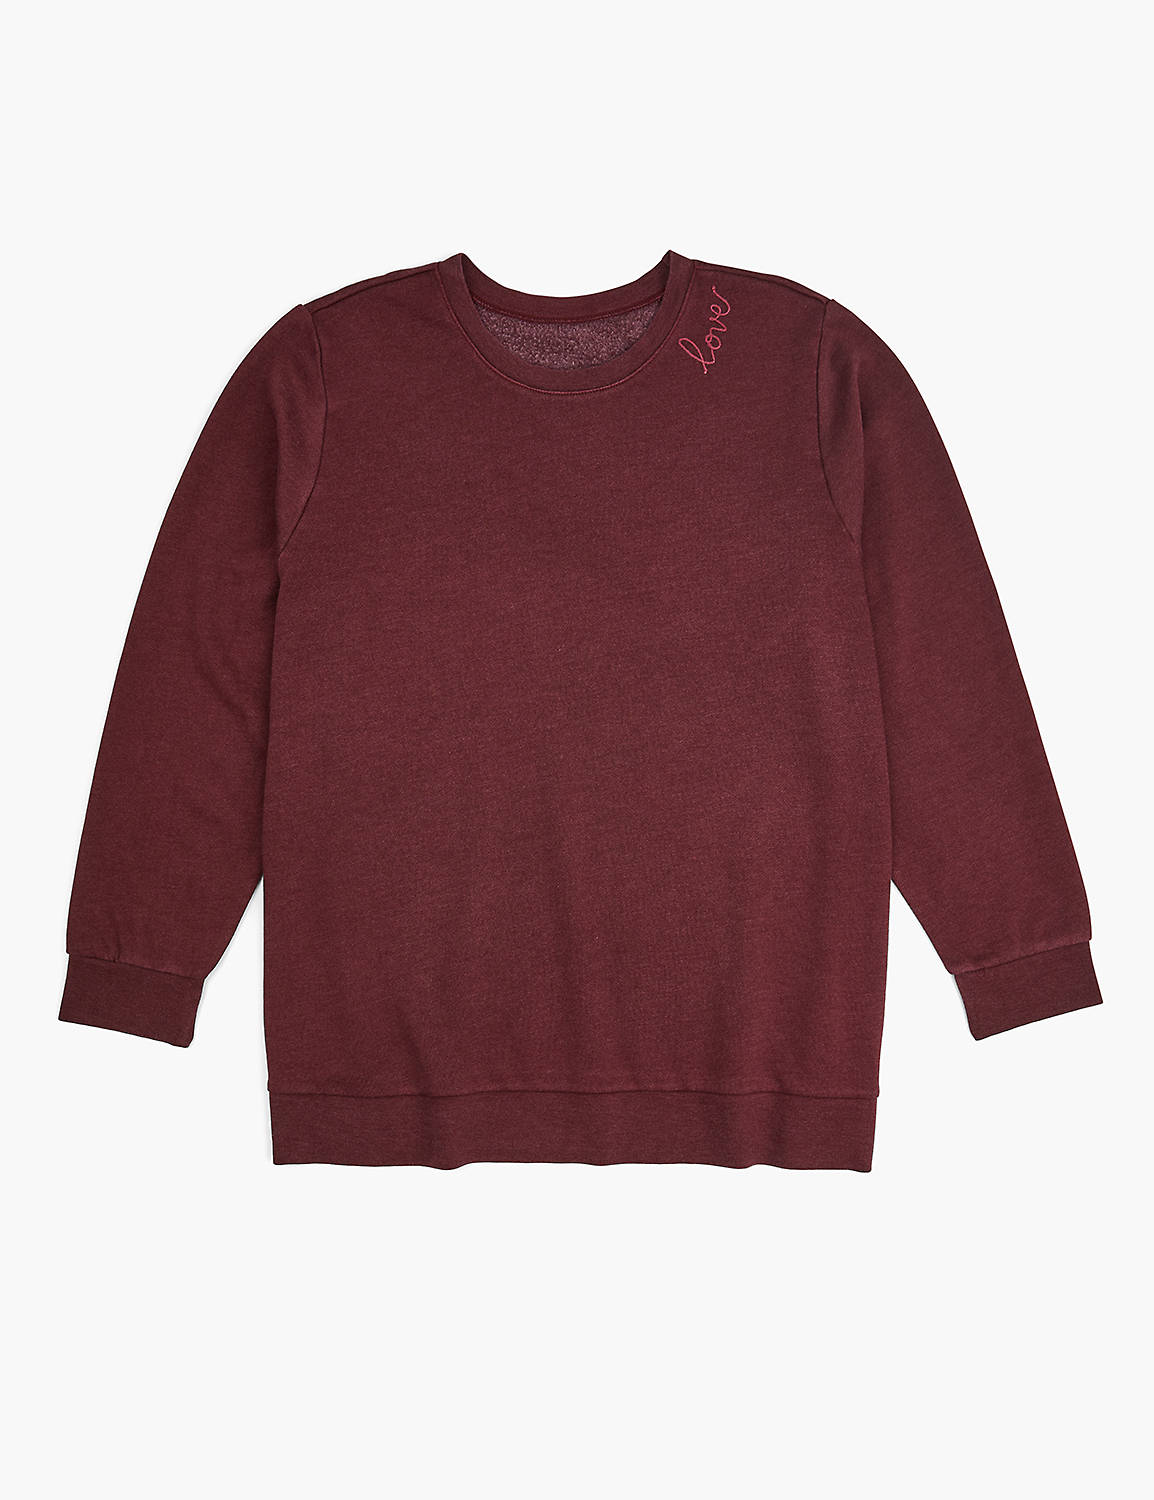 lane bryant embroidered love graphic sweatshirt 22/24 maroon